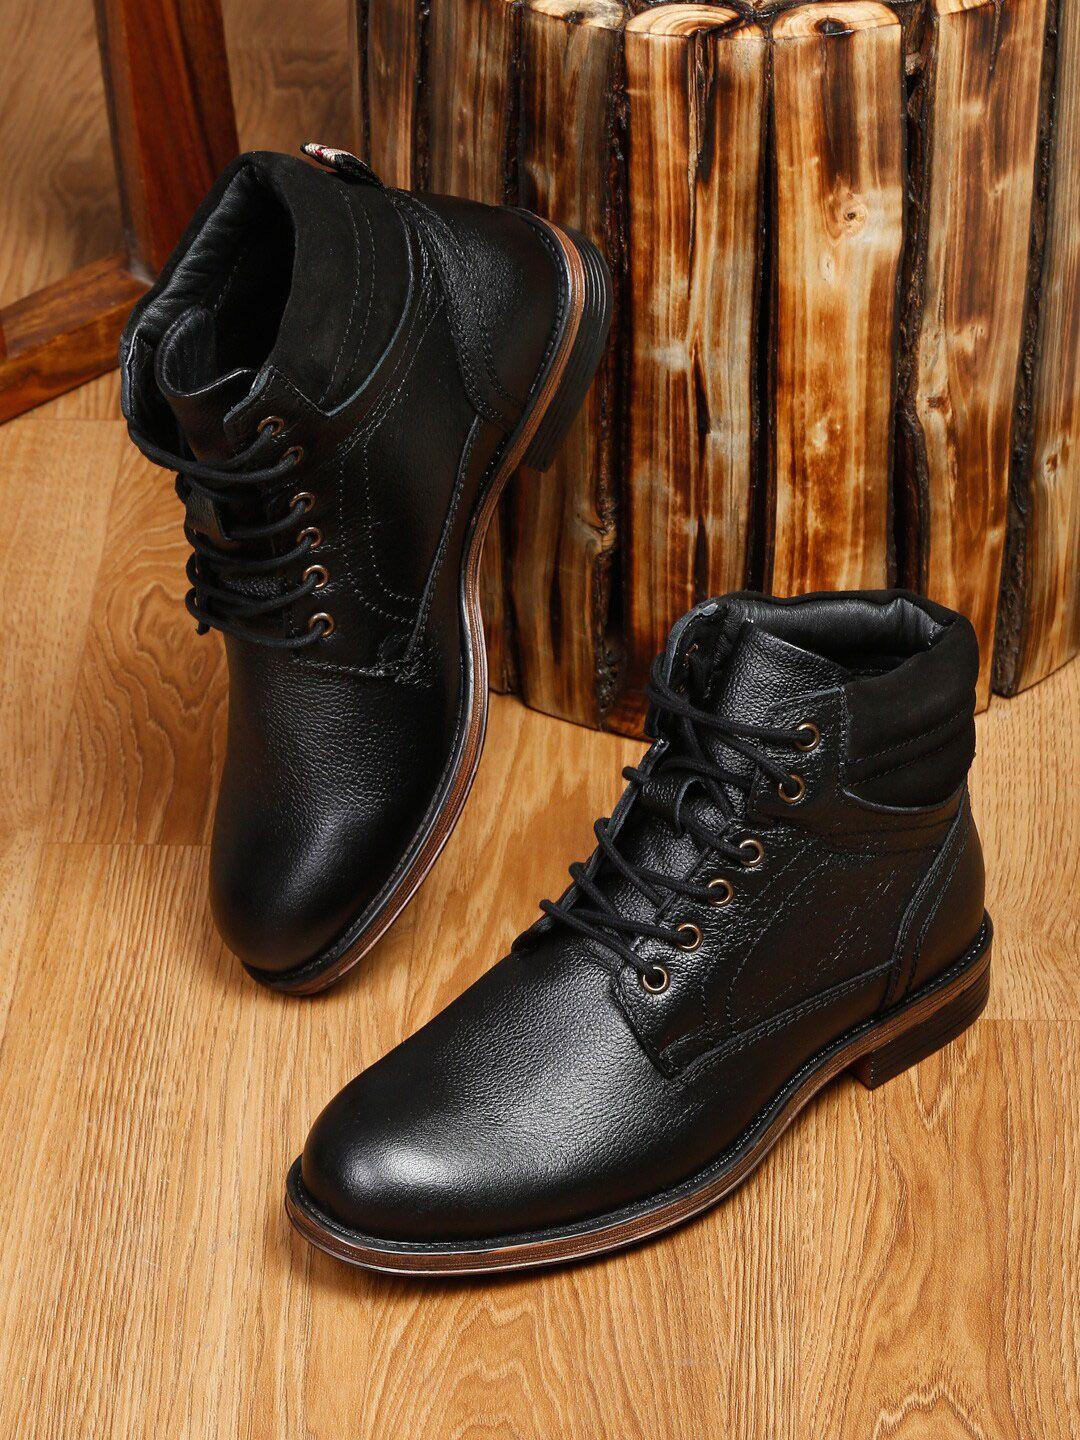 teakwood leathers men leather regular boots